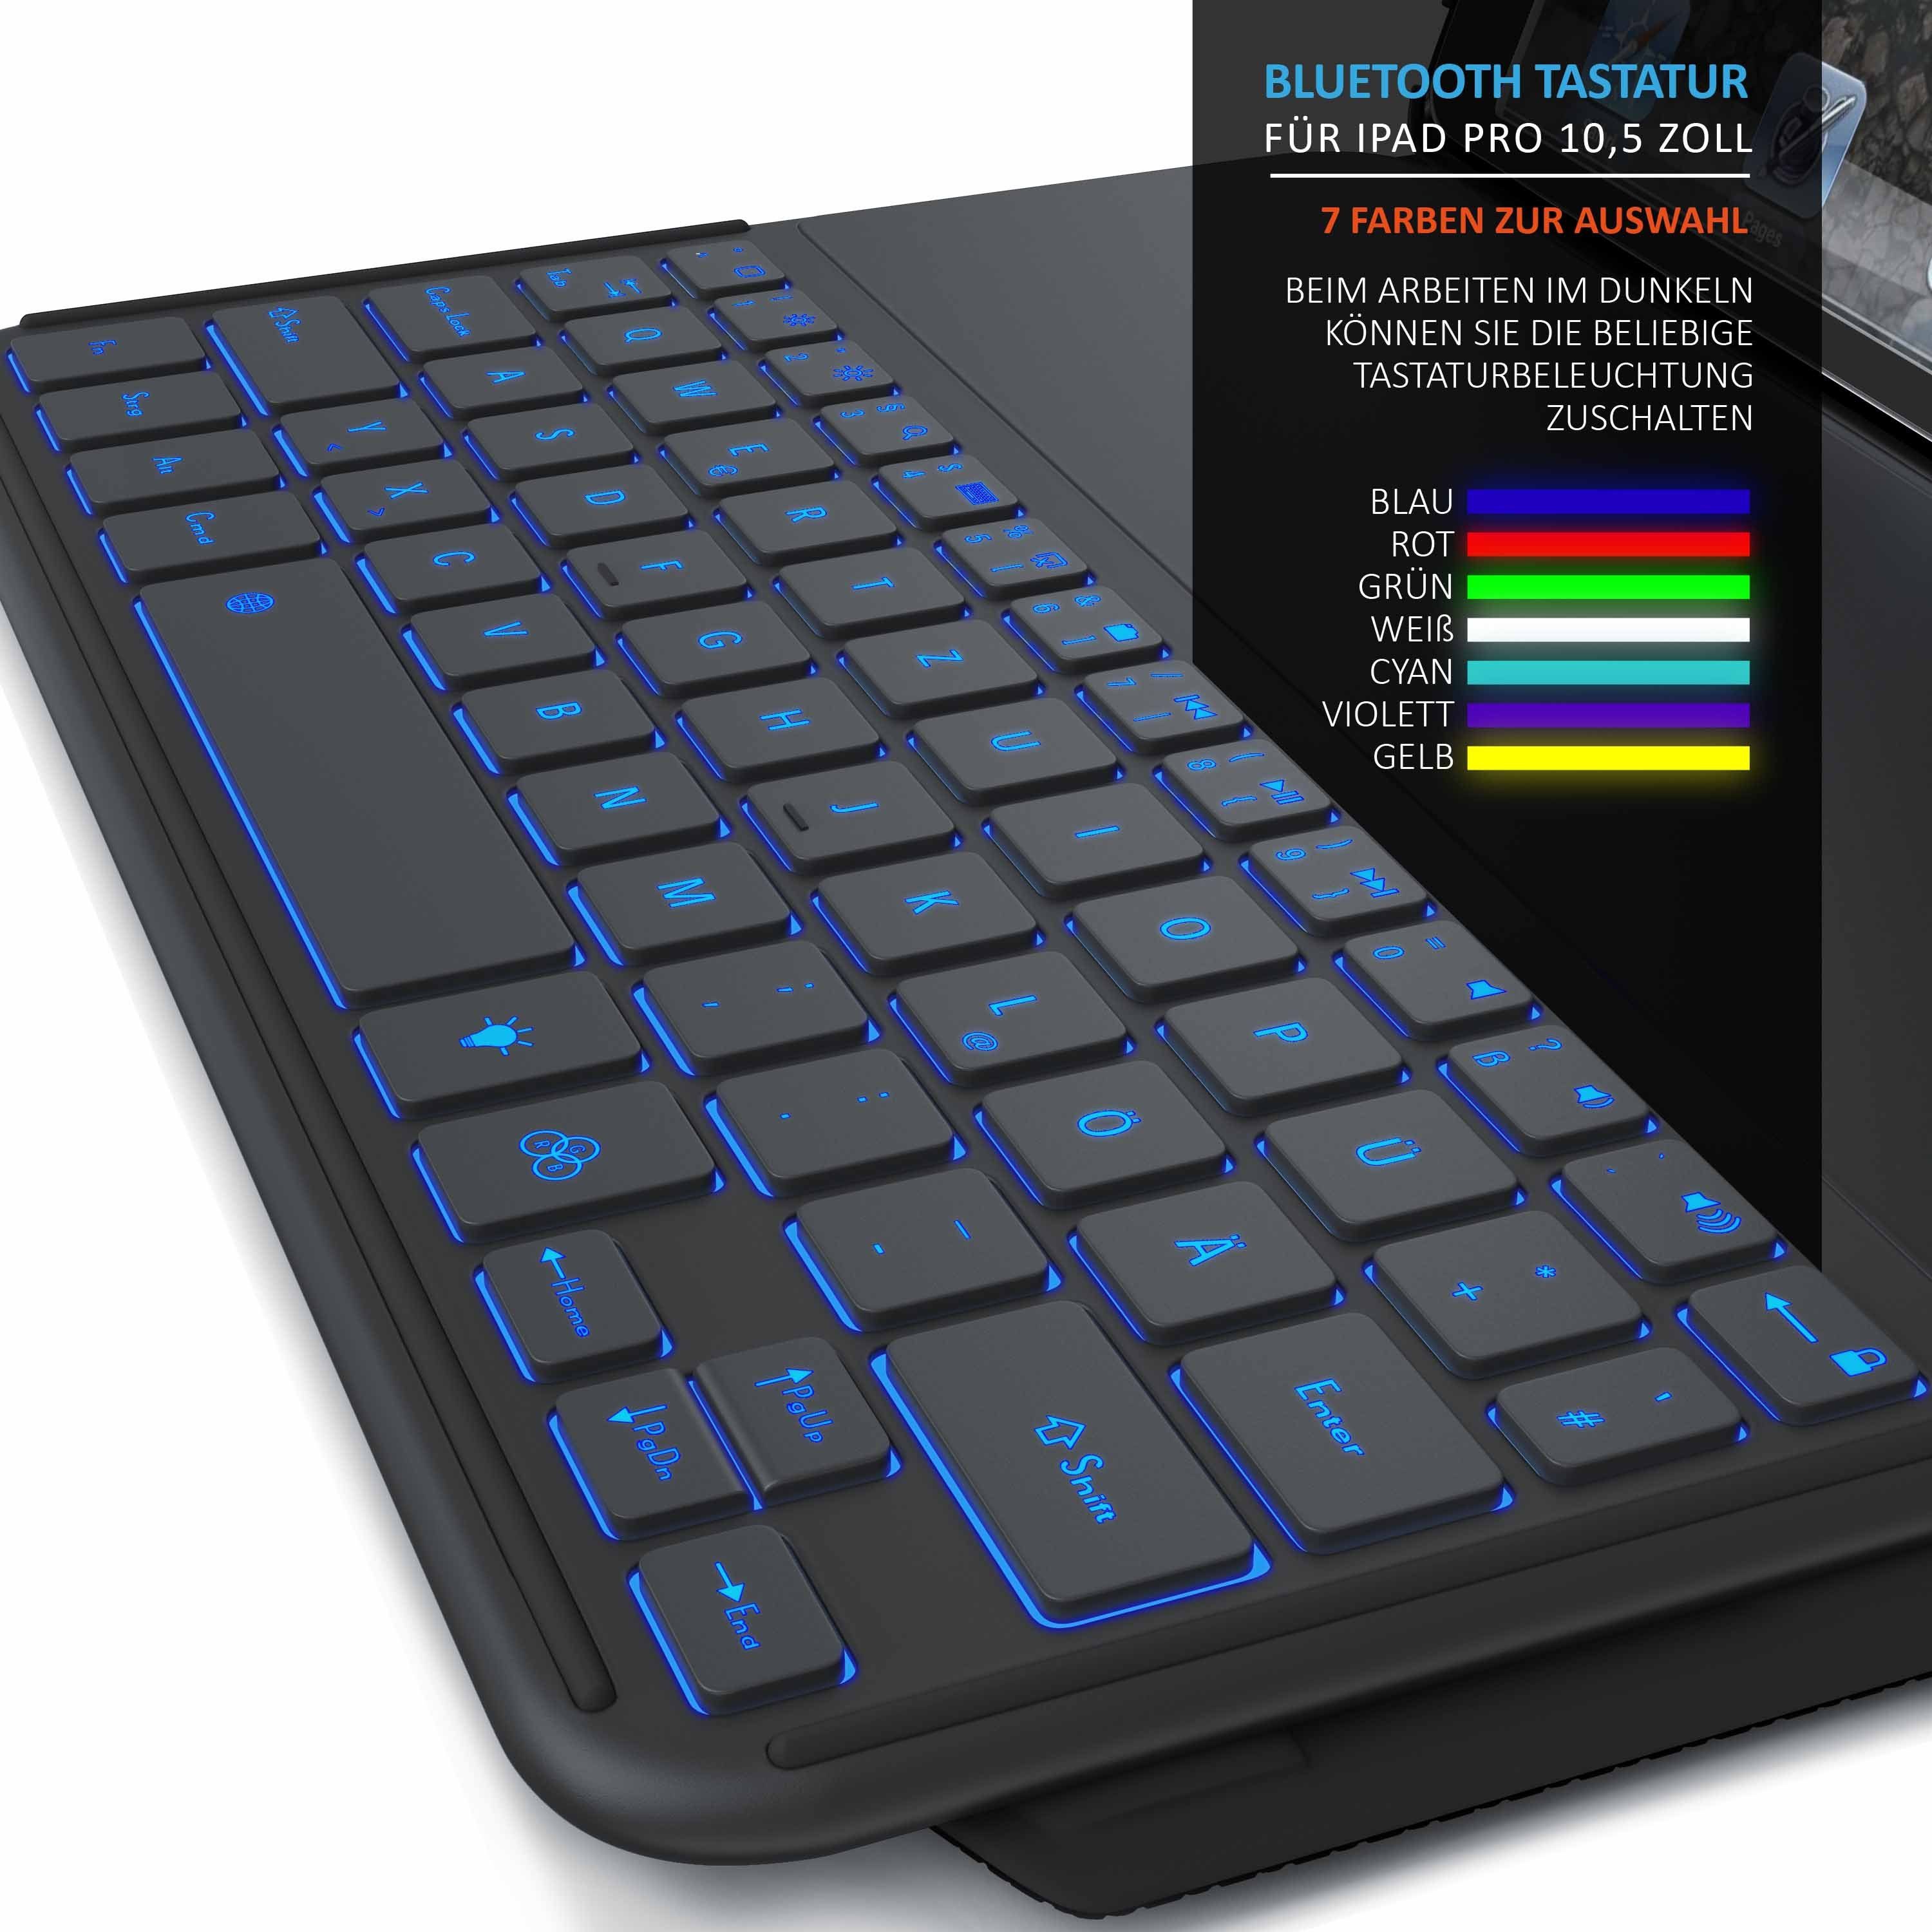 Apple Aplic Pro Keyboard iPad mit Tablet-Tastatur Layout) 10,5", Bluetooth für (Kunstledercase